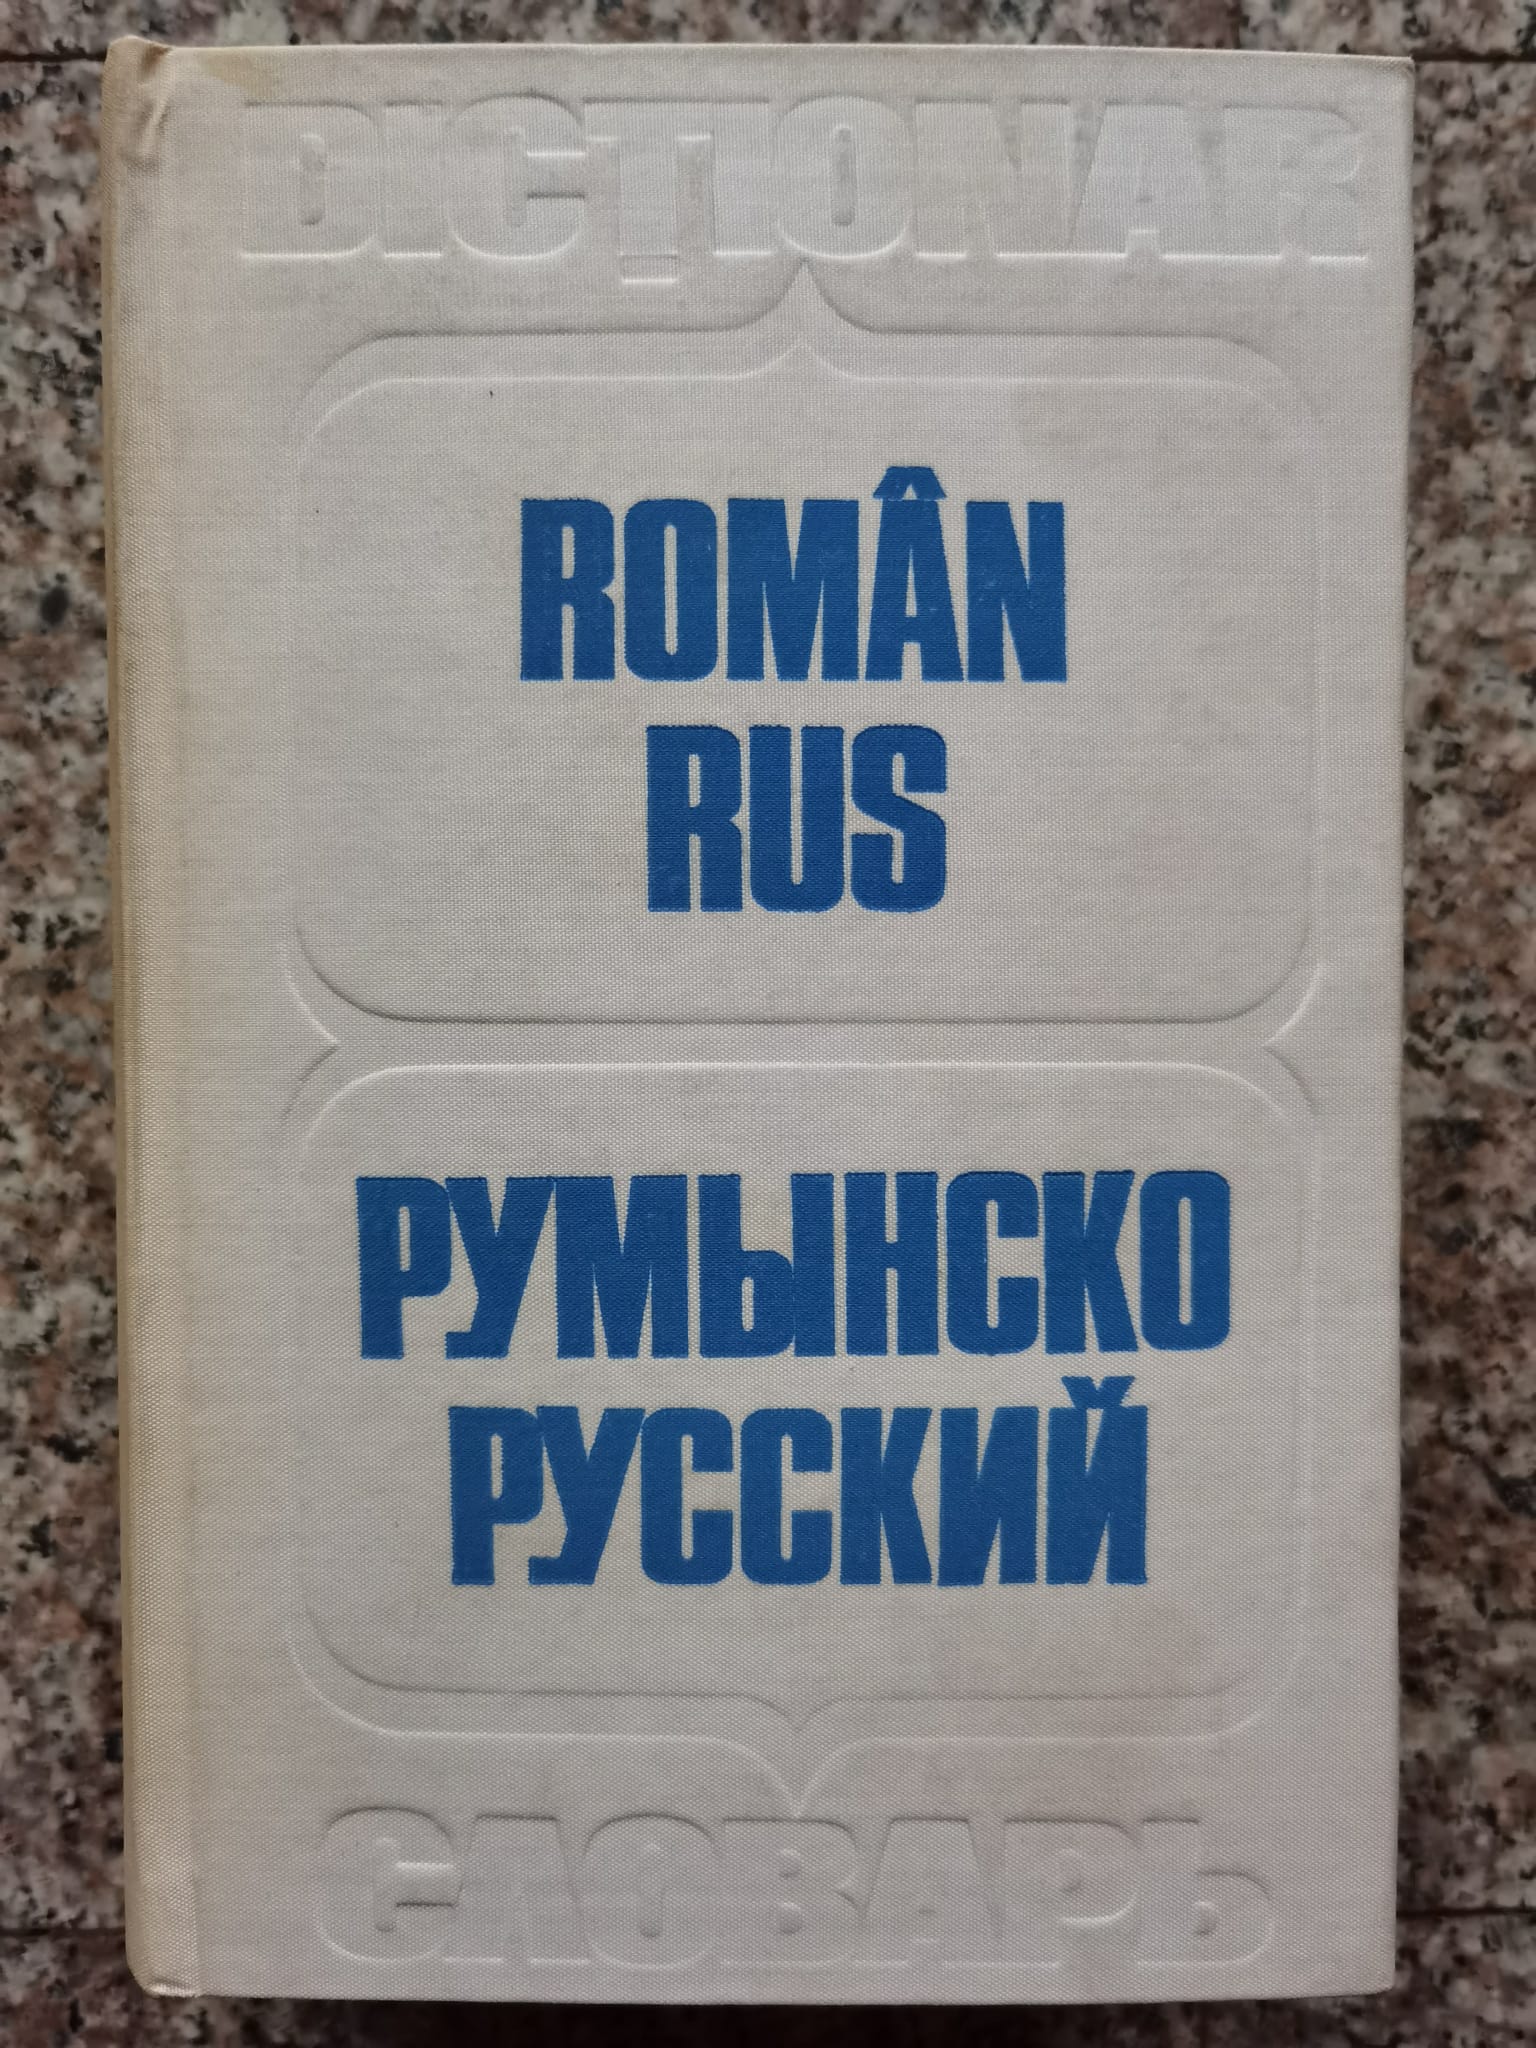 DICTIONAR ROMAN-RUS                                                                       ...